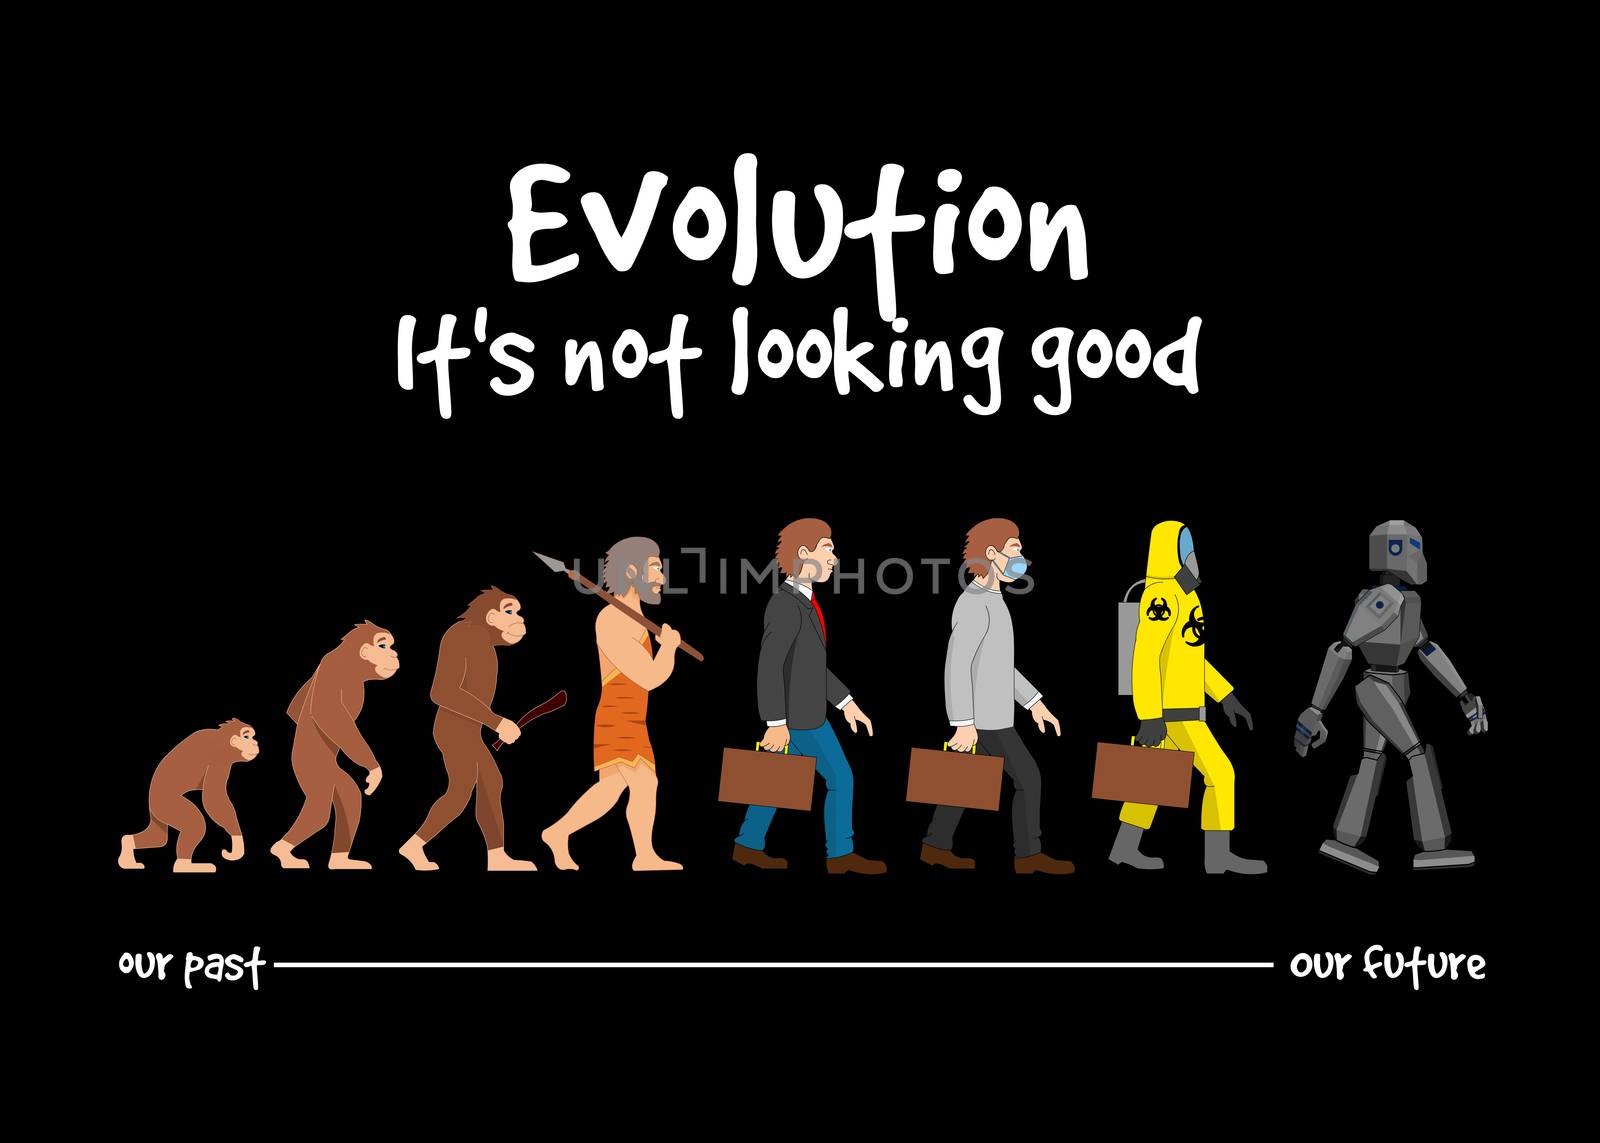 Evolution - it's not looking good